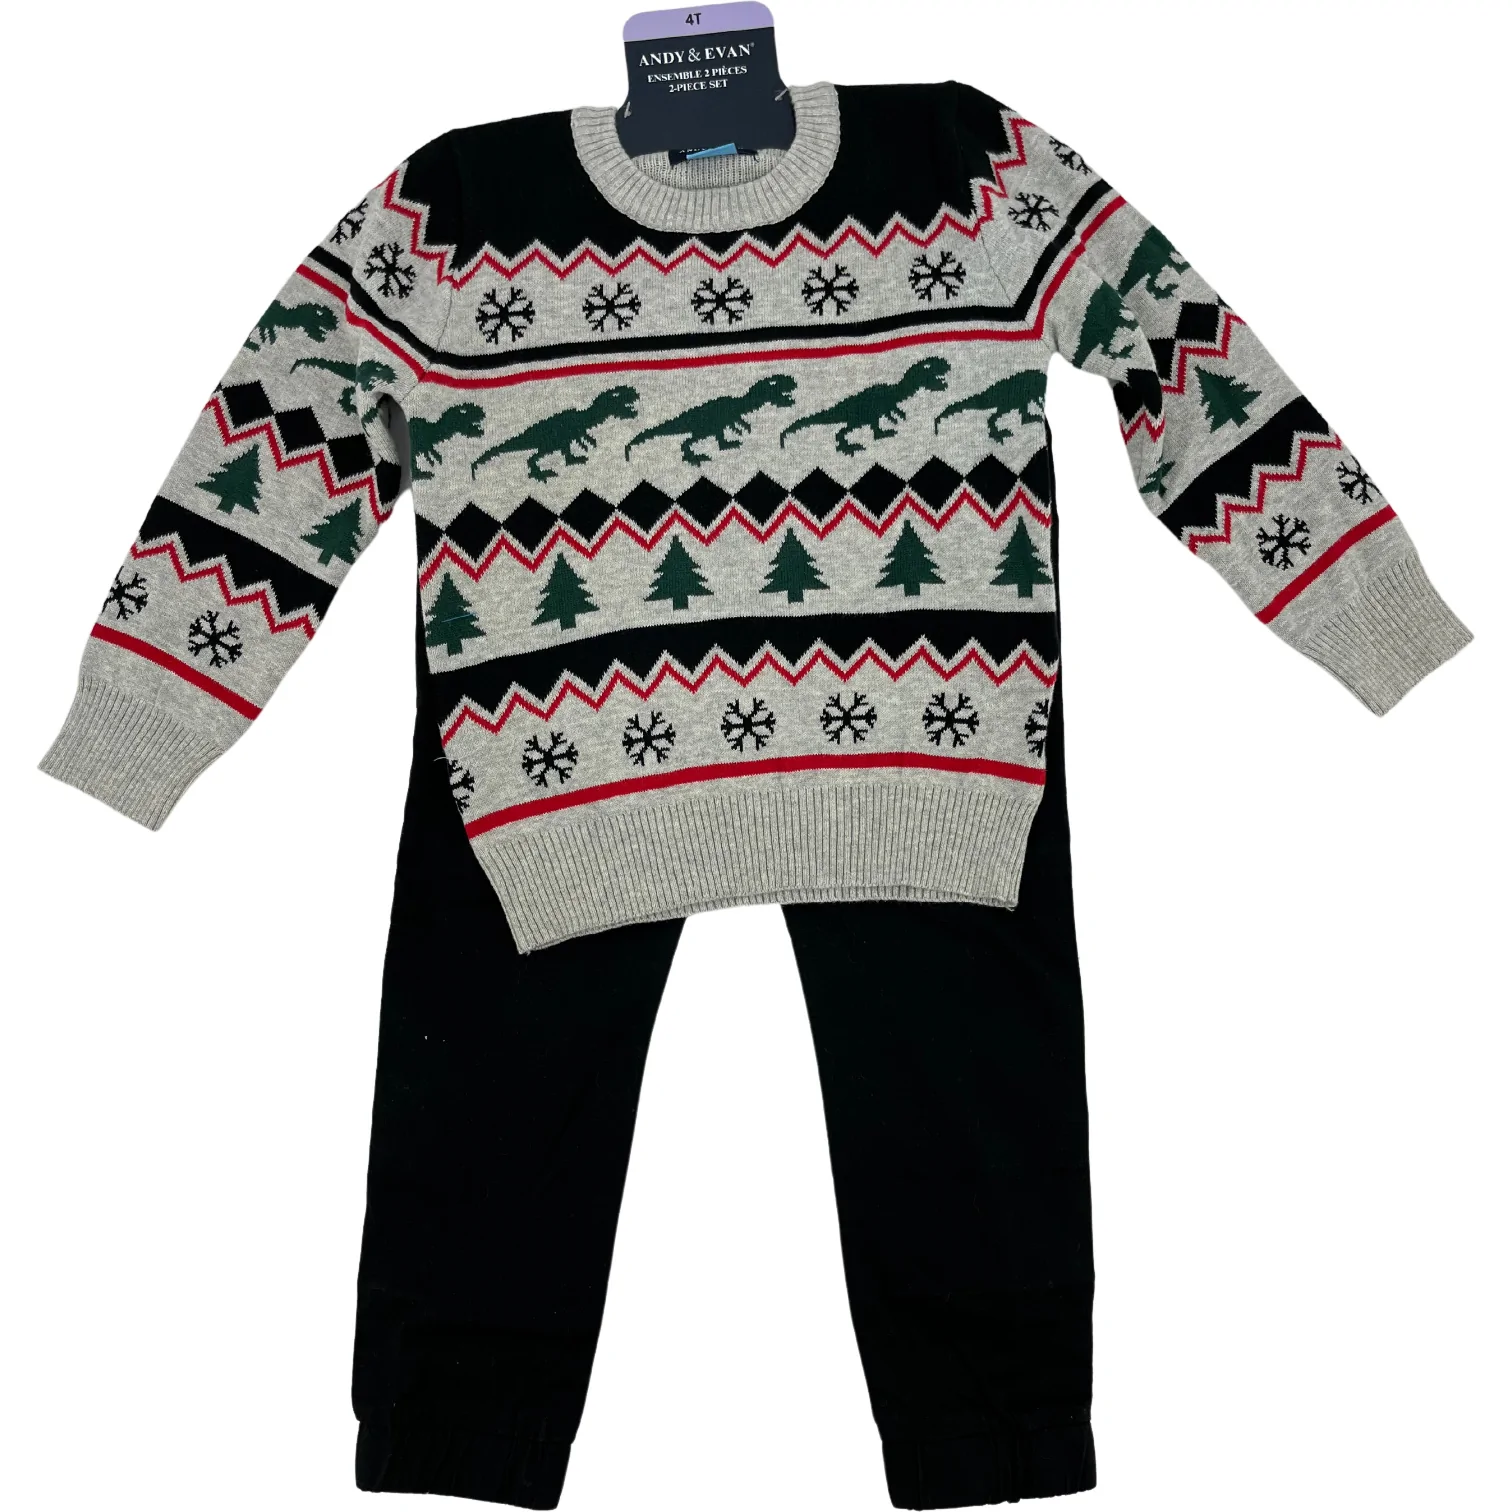 Andy & Evan Christmas Sweater Set / 2 Piece Set / 4T